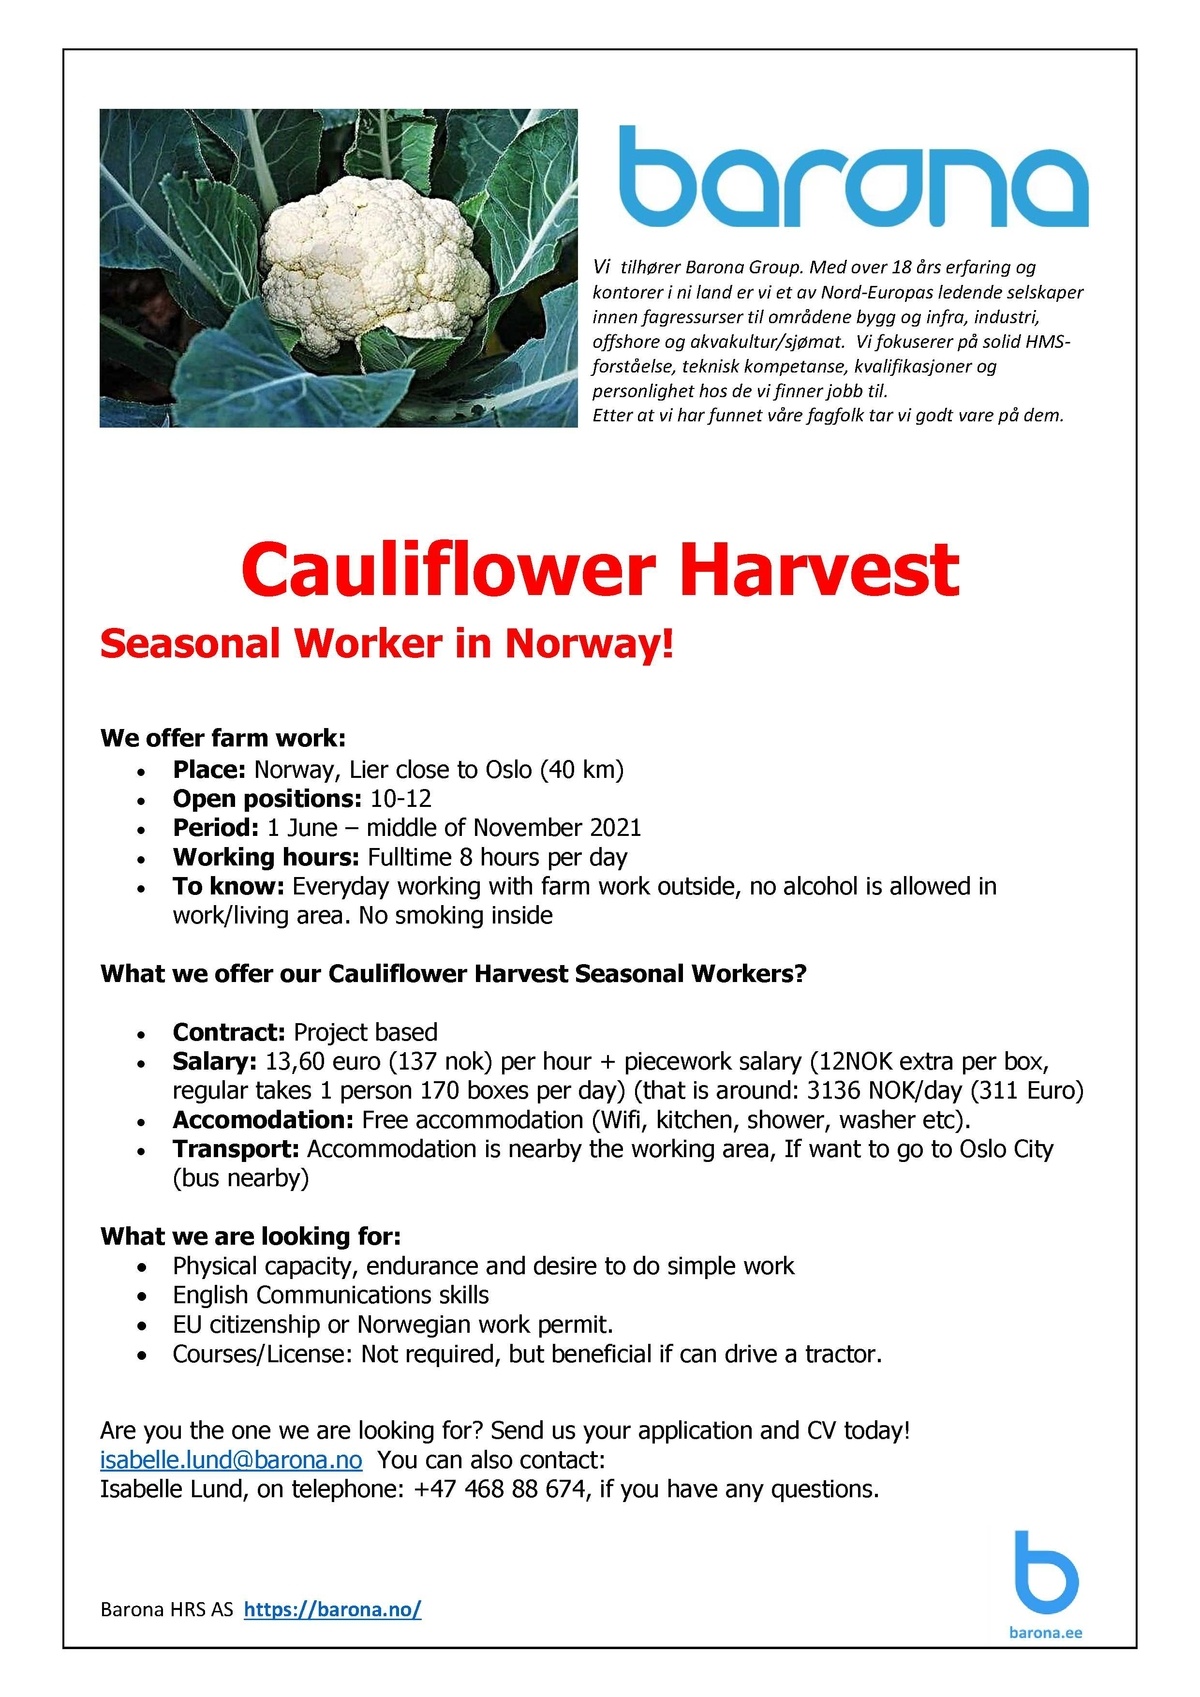 Barona Eesti OÜ Cauliflower Harvest in Norway